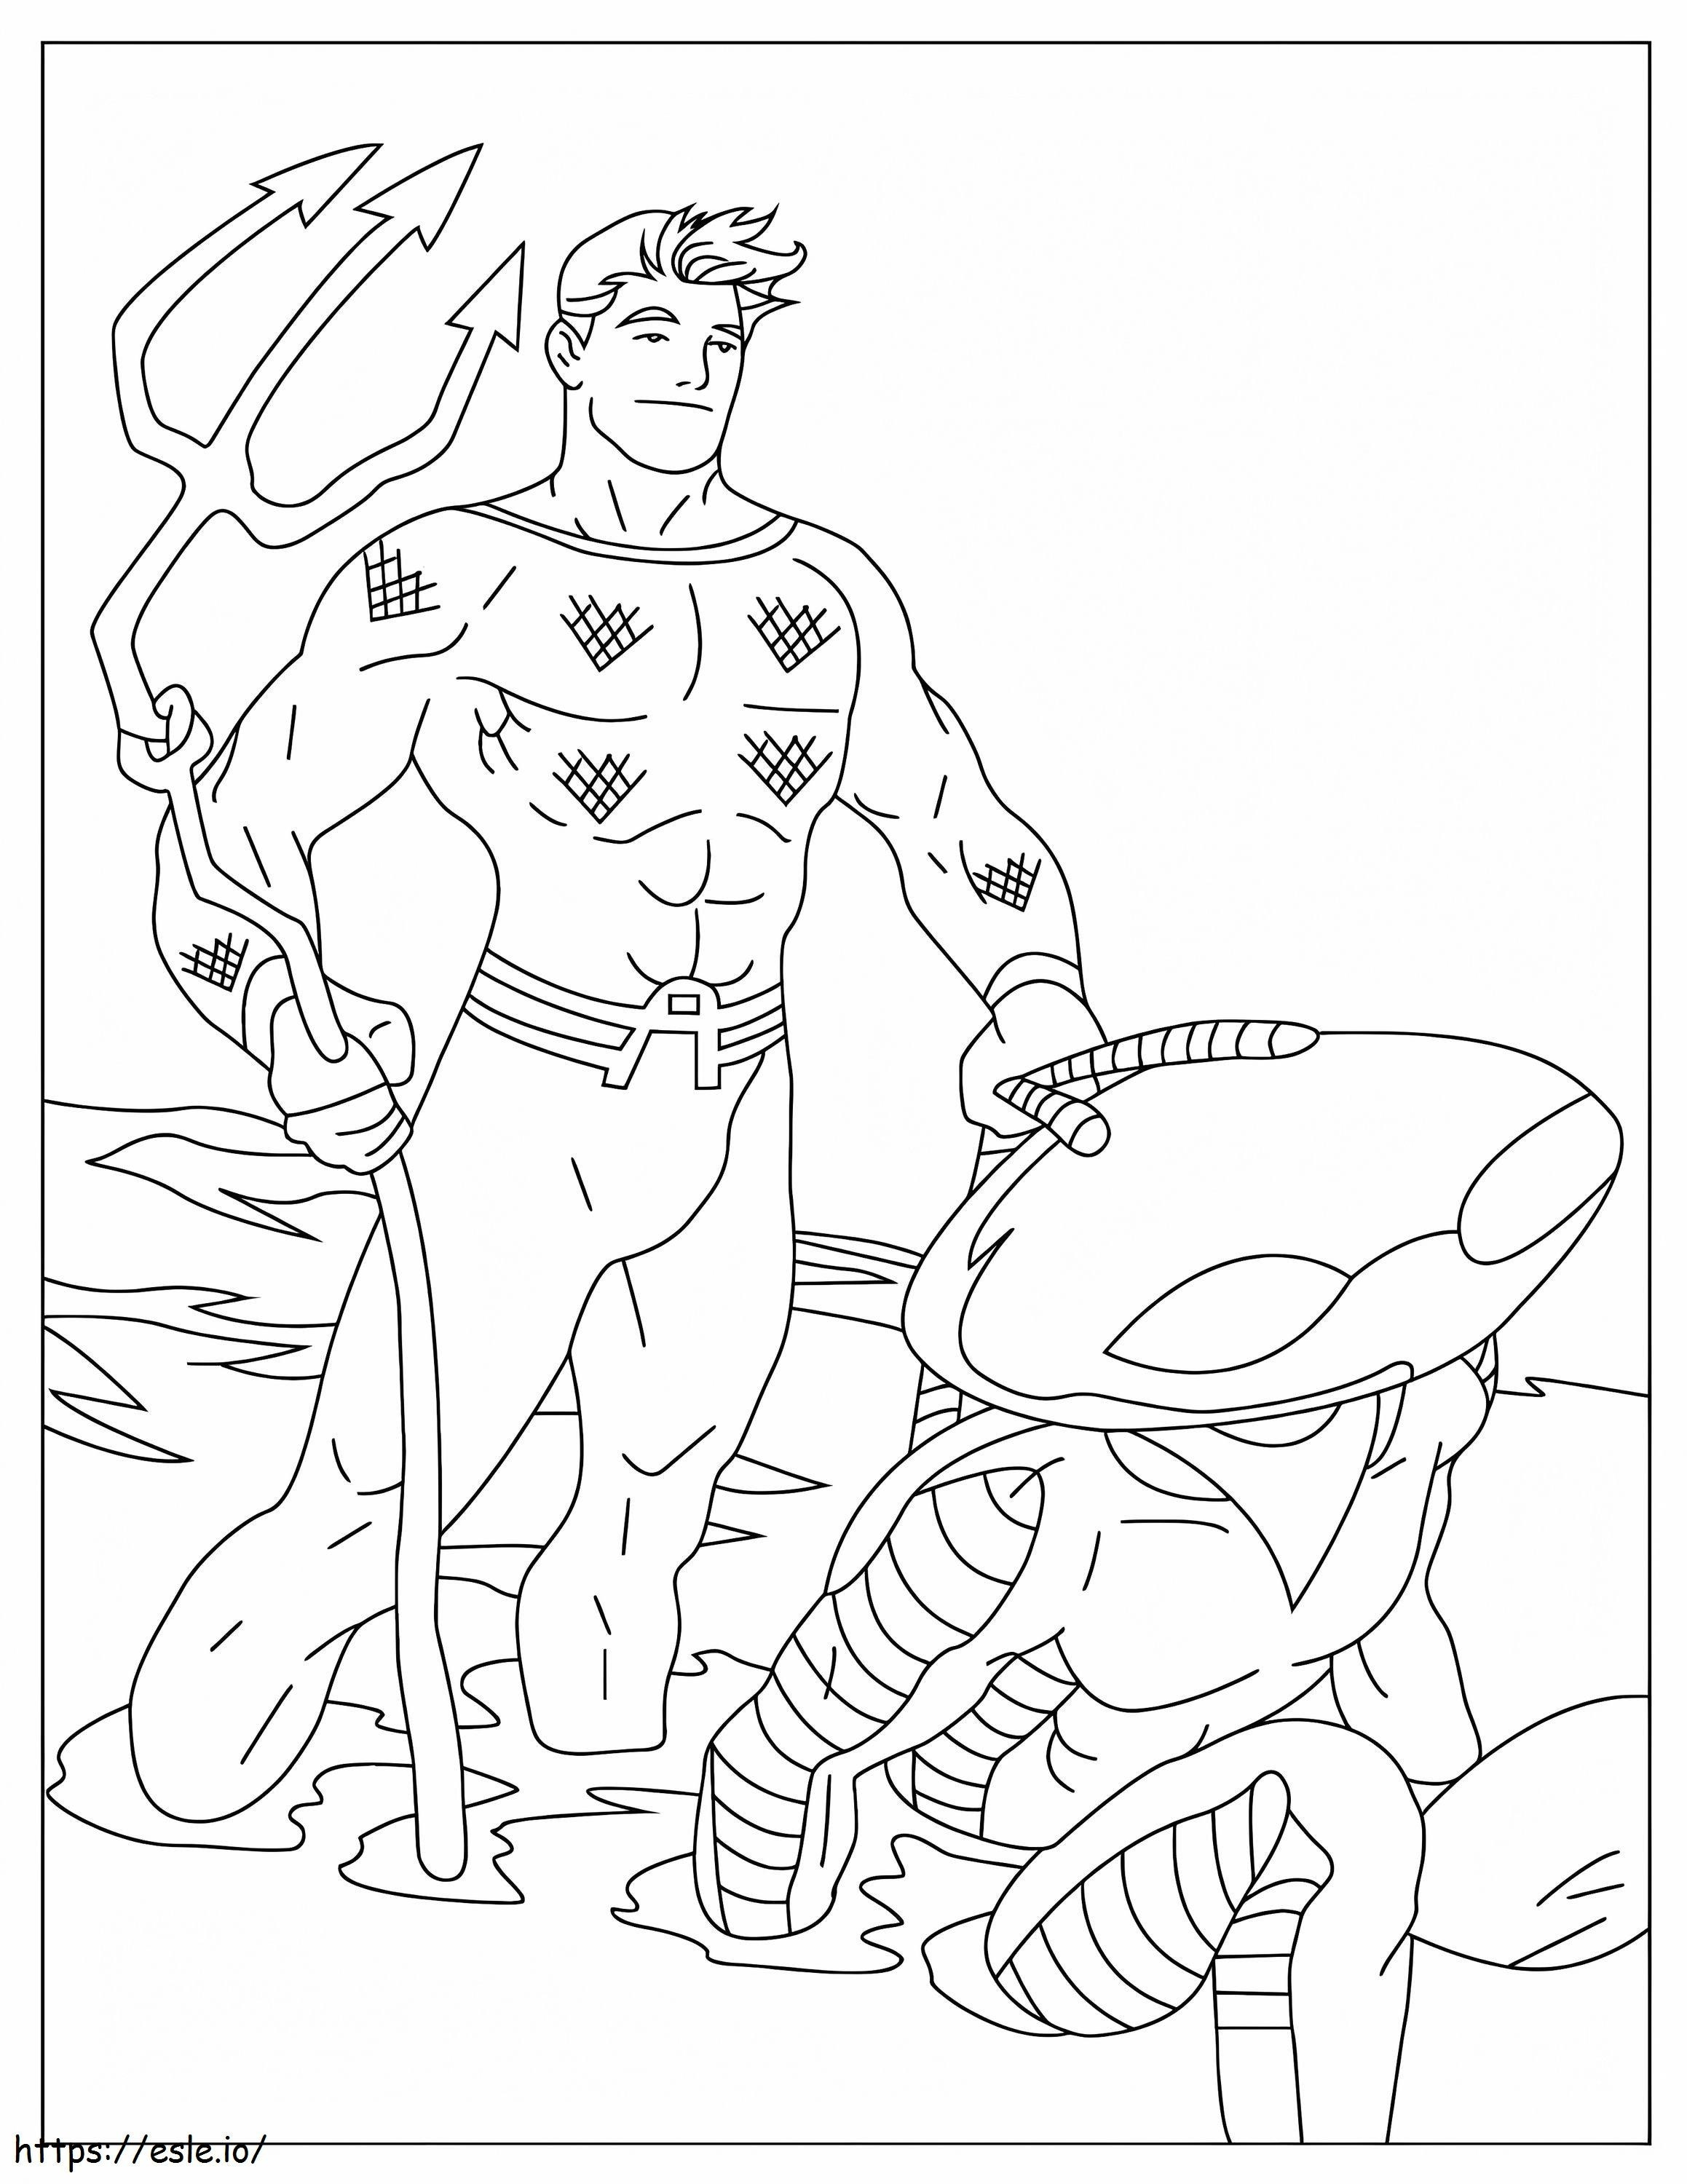 Aquaman łapie mantę kolorowanka